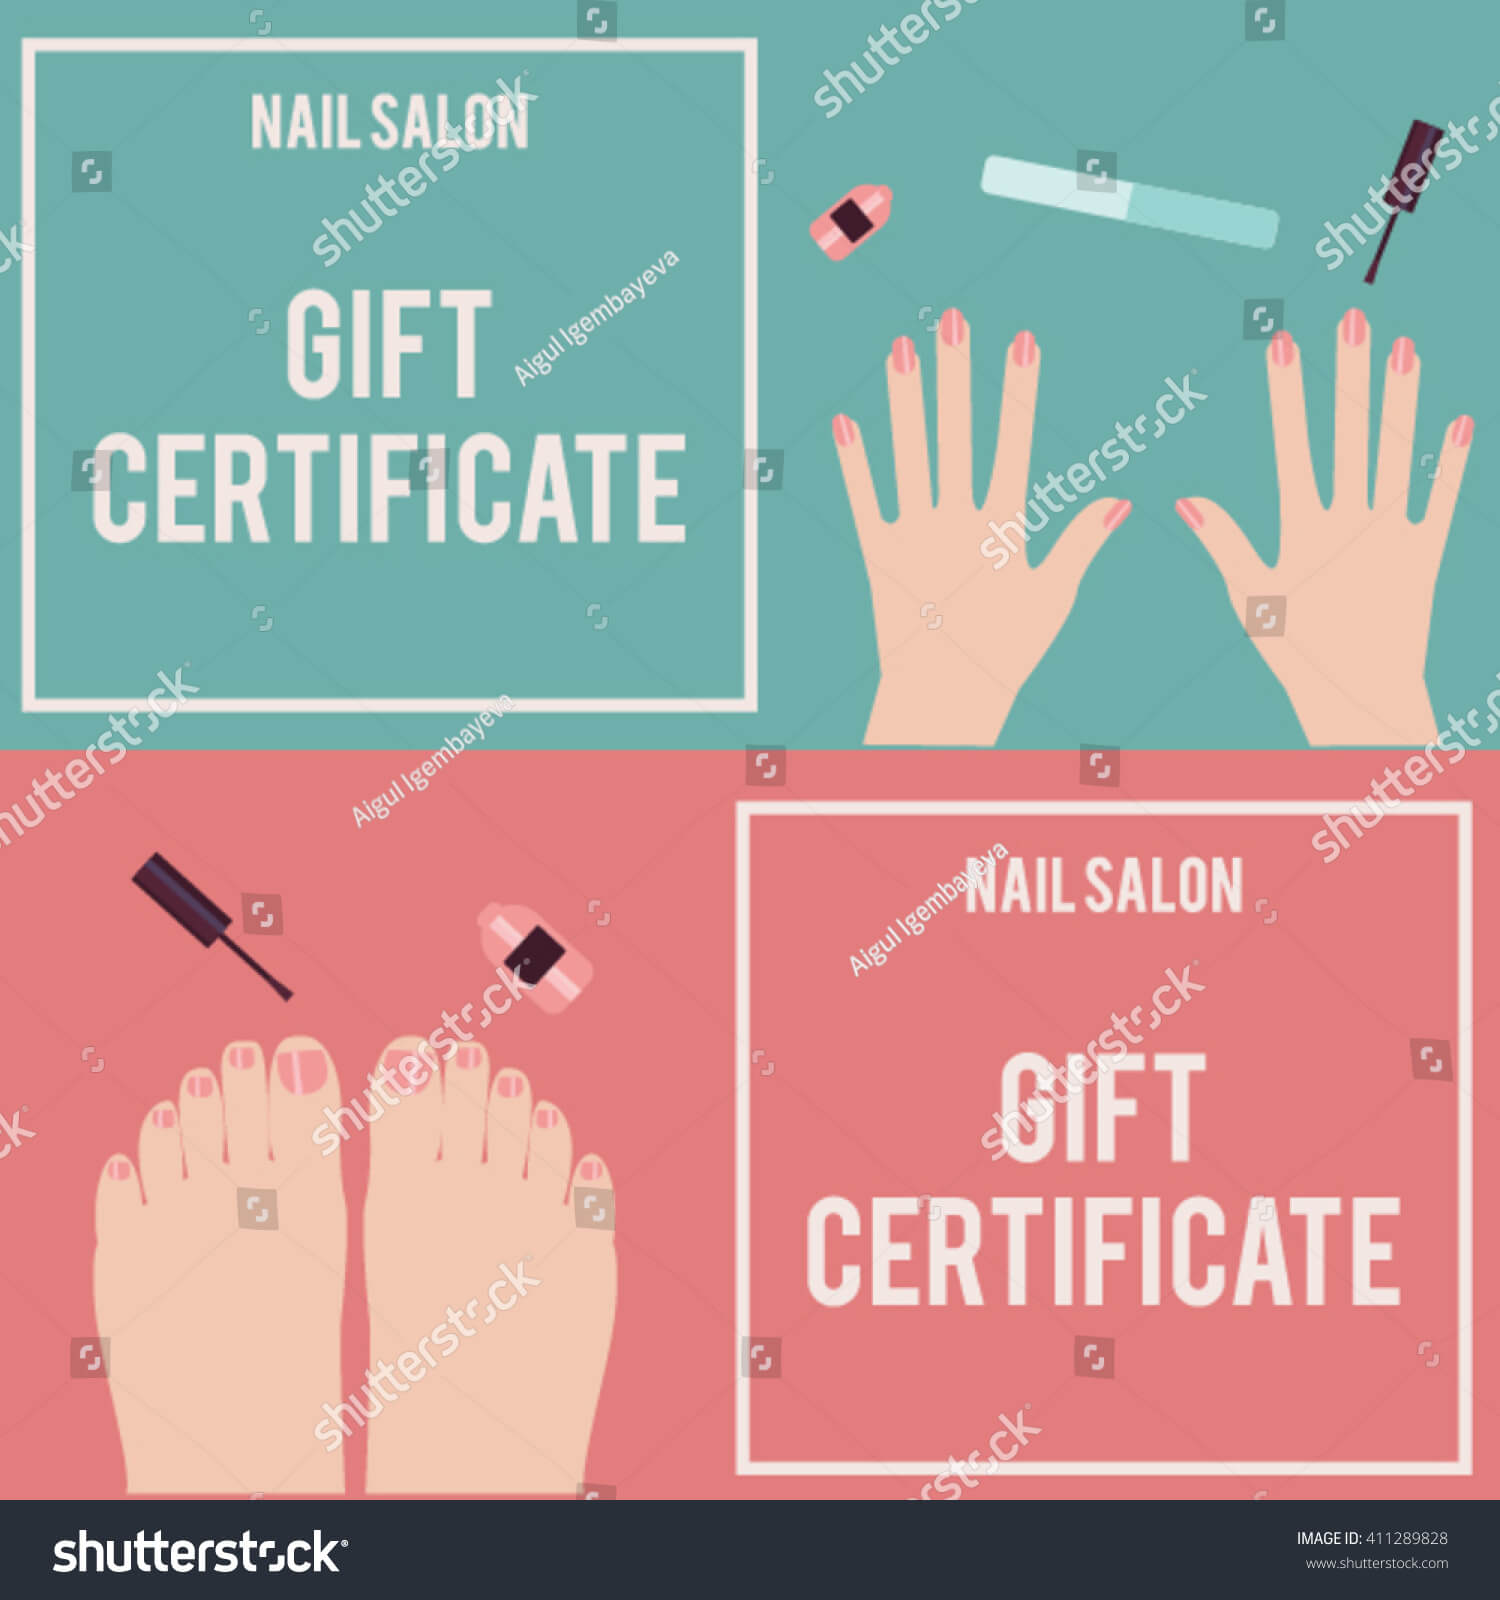 Nail Salon Gift Certificate Gift Certificate Stock Image For Nail Gift Certificate Template Free